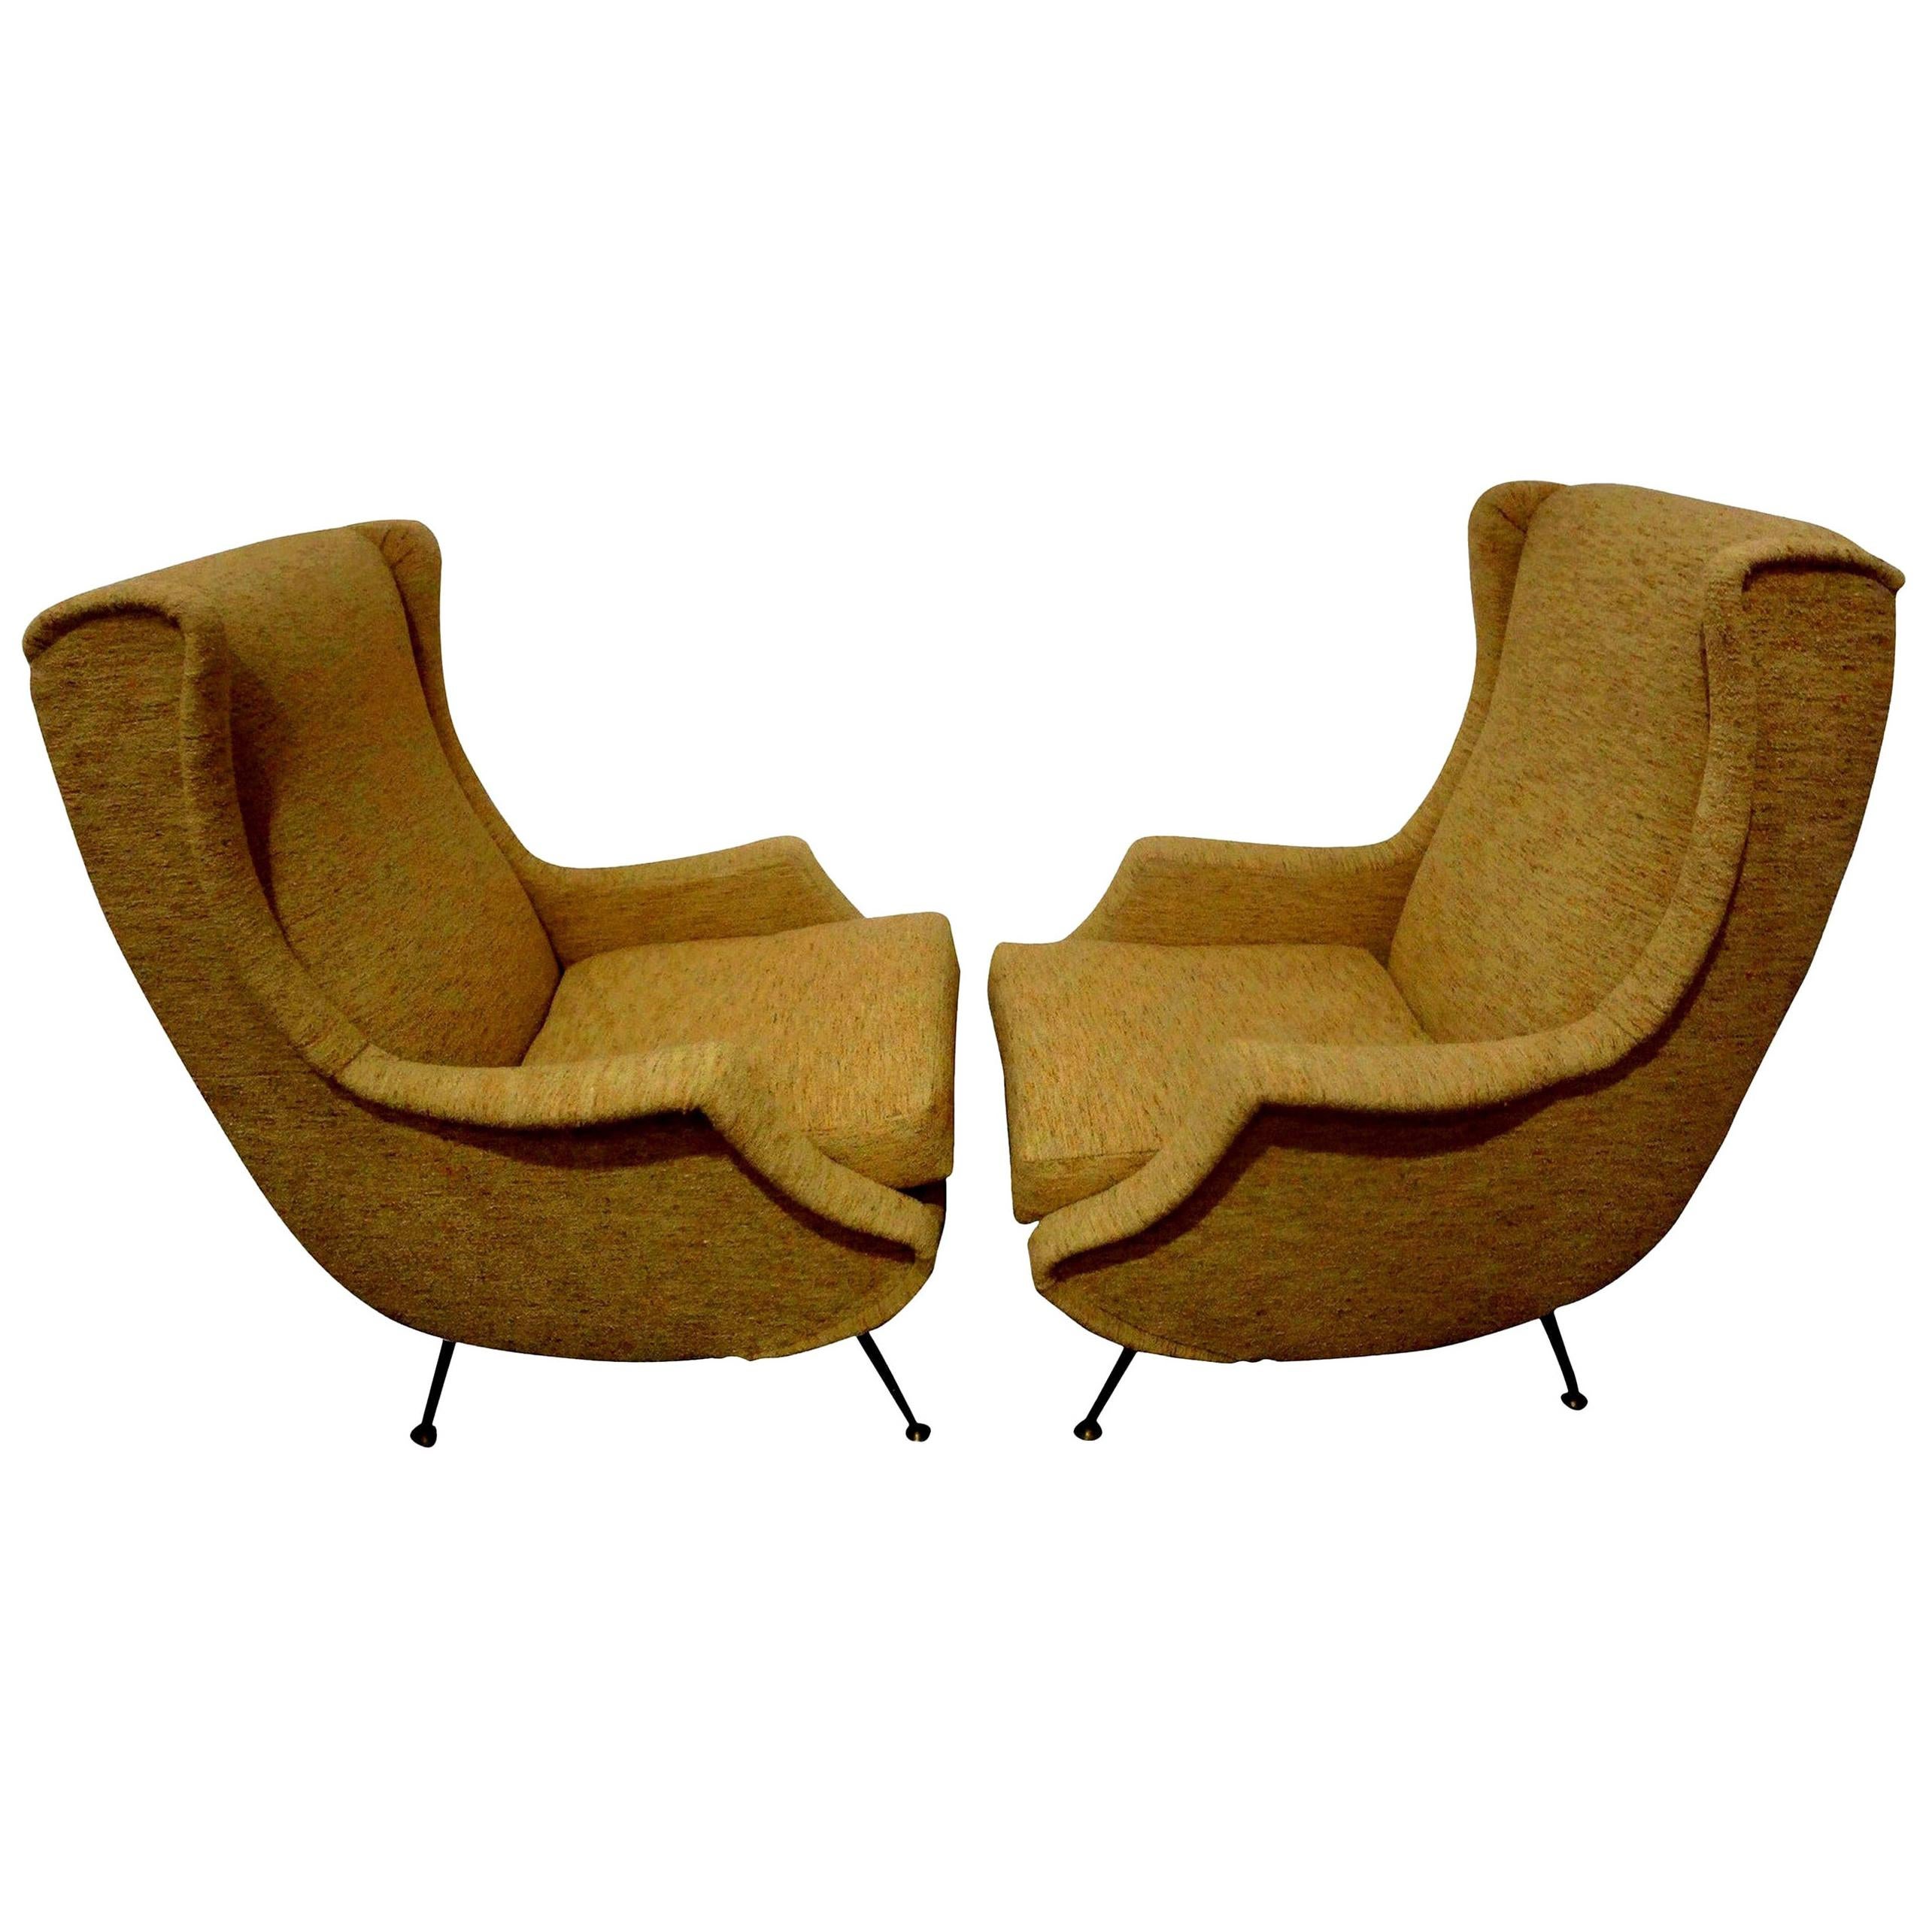 Pair of Italian Mid-Century Lounge Chairs Inspired by Minotti